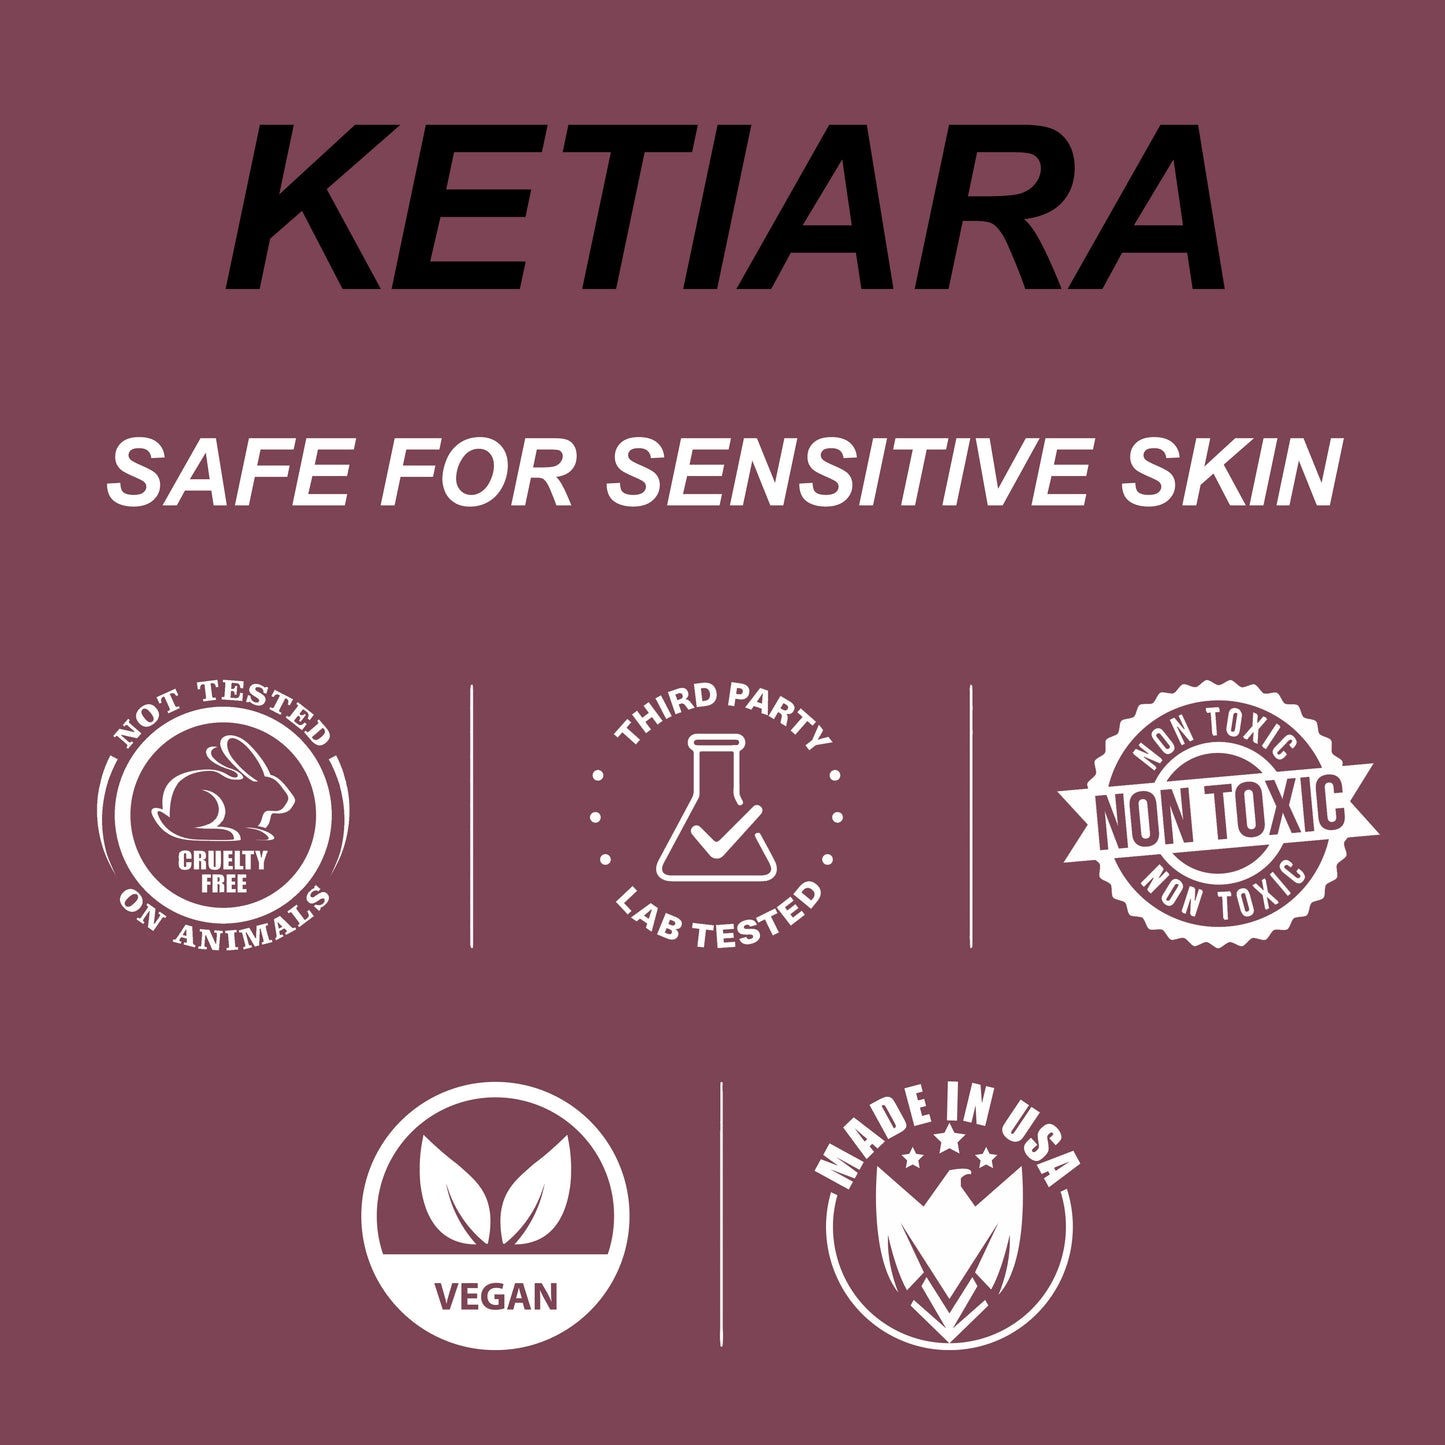 Ketiara Premium Full Coverage Big Brush Mojave Liquid Lipstick Infused With Hyaluronic Acid, 6 ml